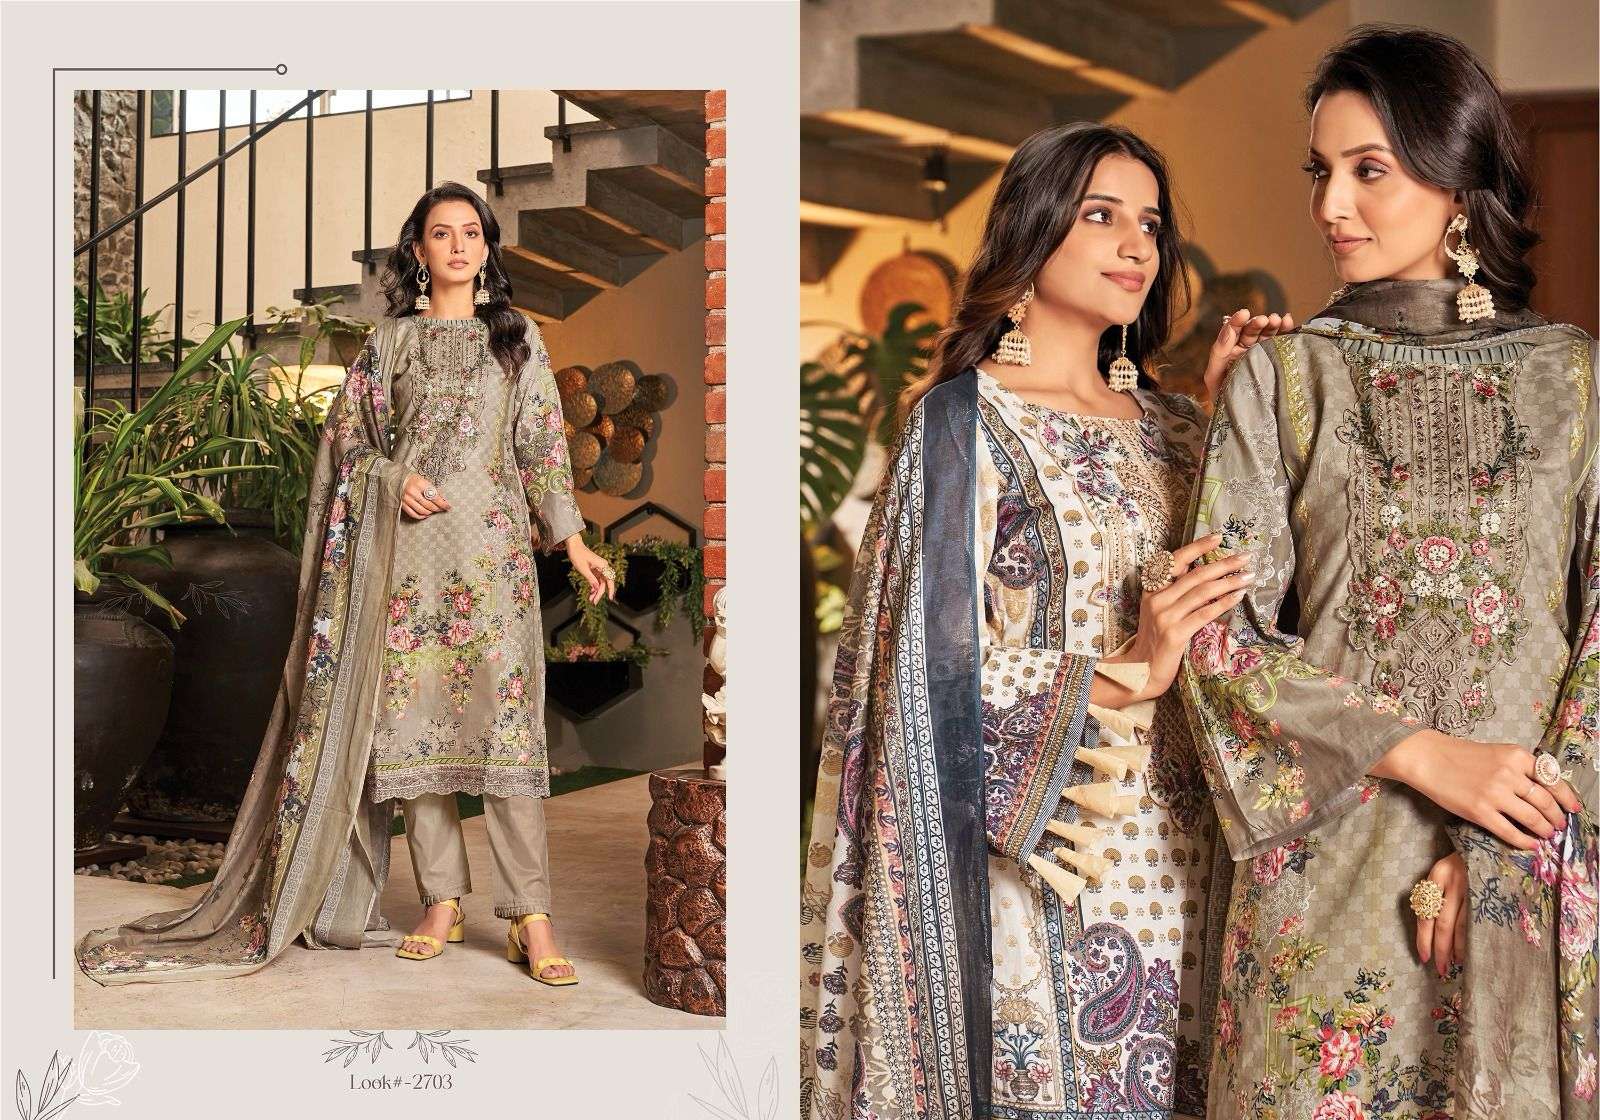 pakiza prints haniya hiba vol-27 2701-2710 series designer heavy pakistani suit for eid wholesaler surat